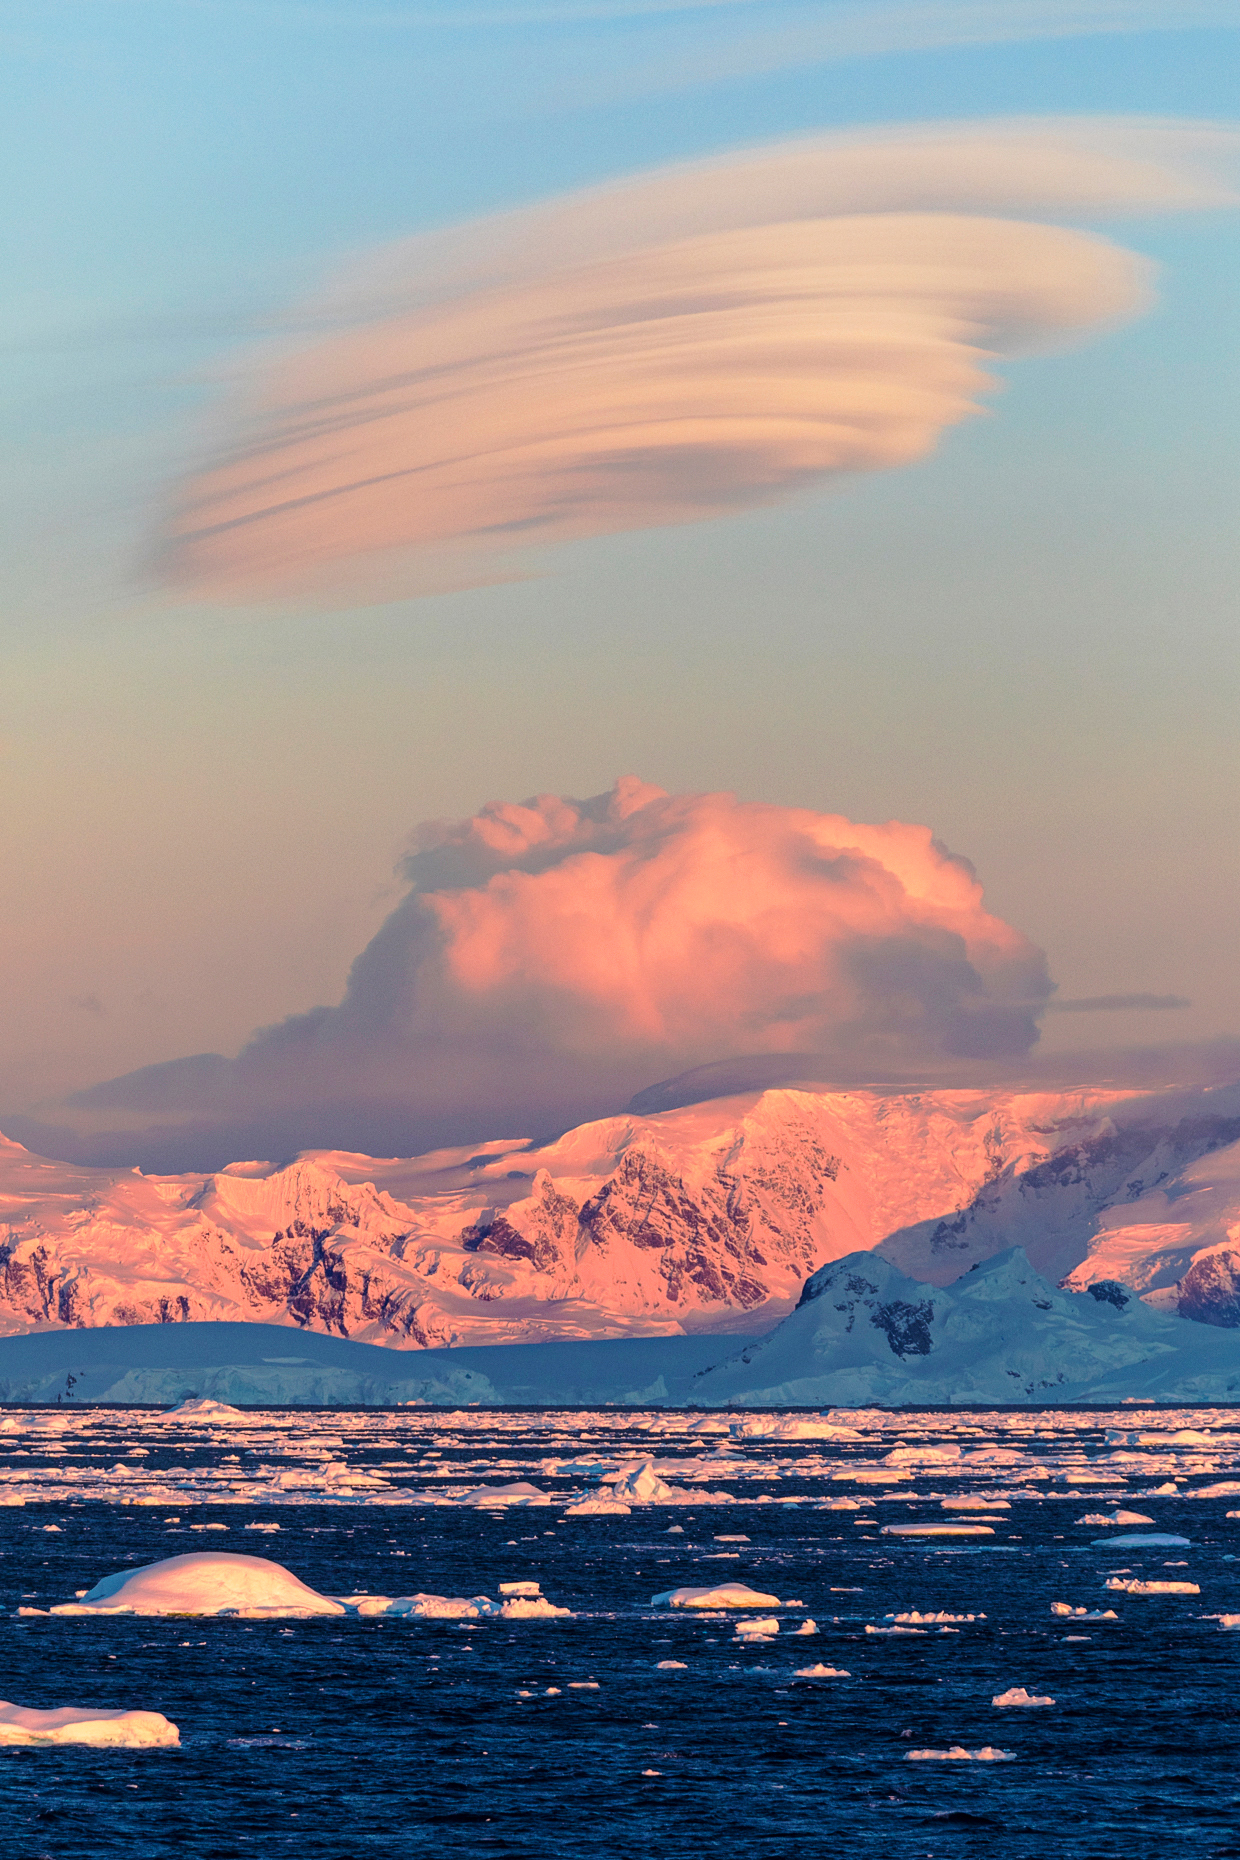 Sea ice & icebergs; Antarctica landscape; Rongé Island; Arctowski Peninsula